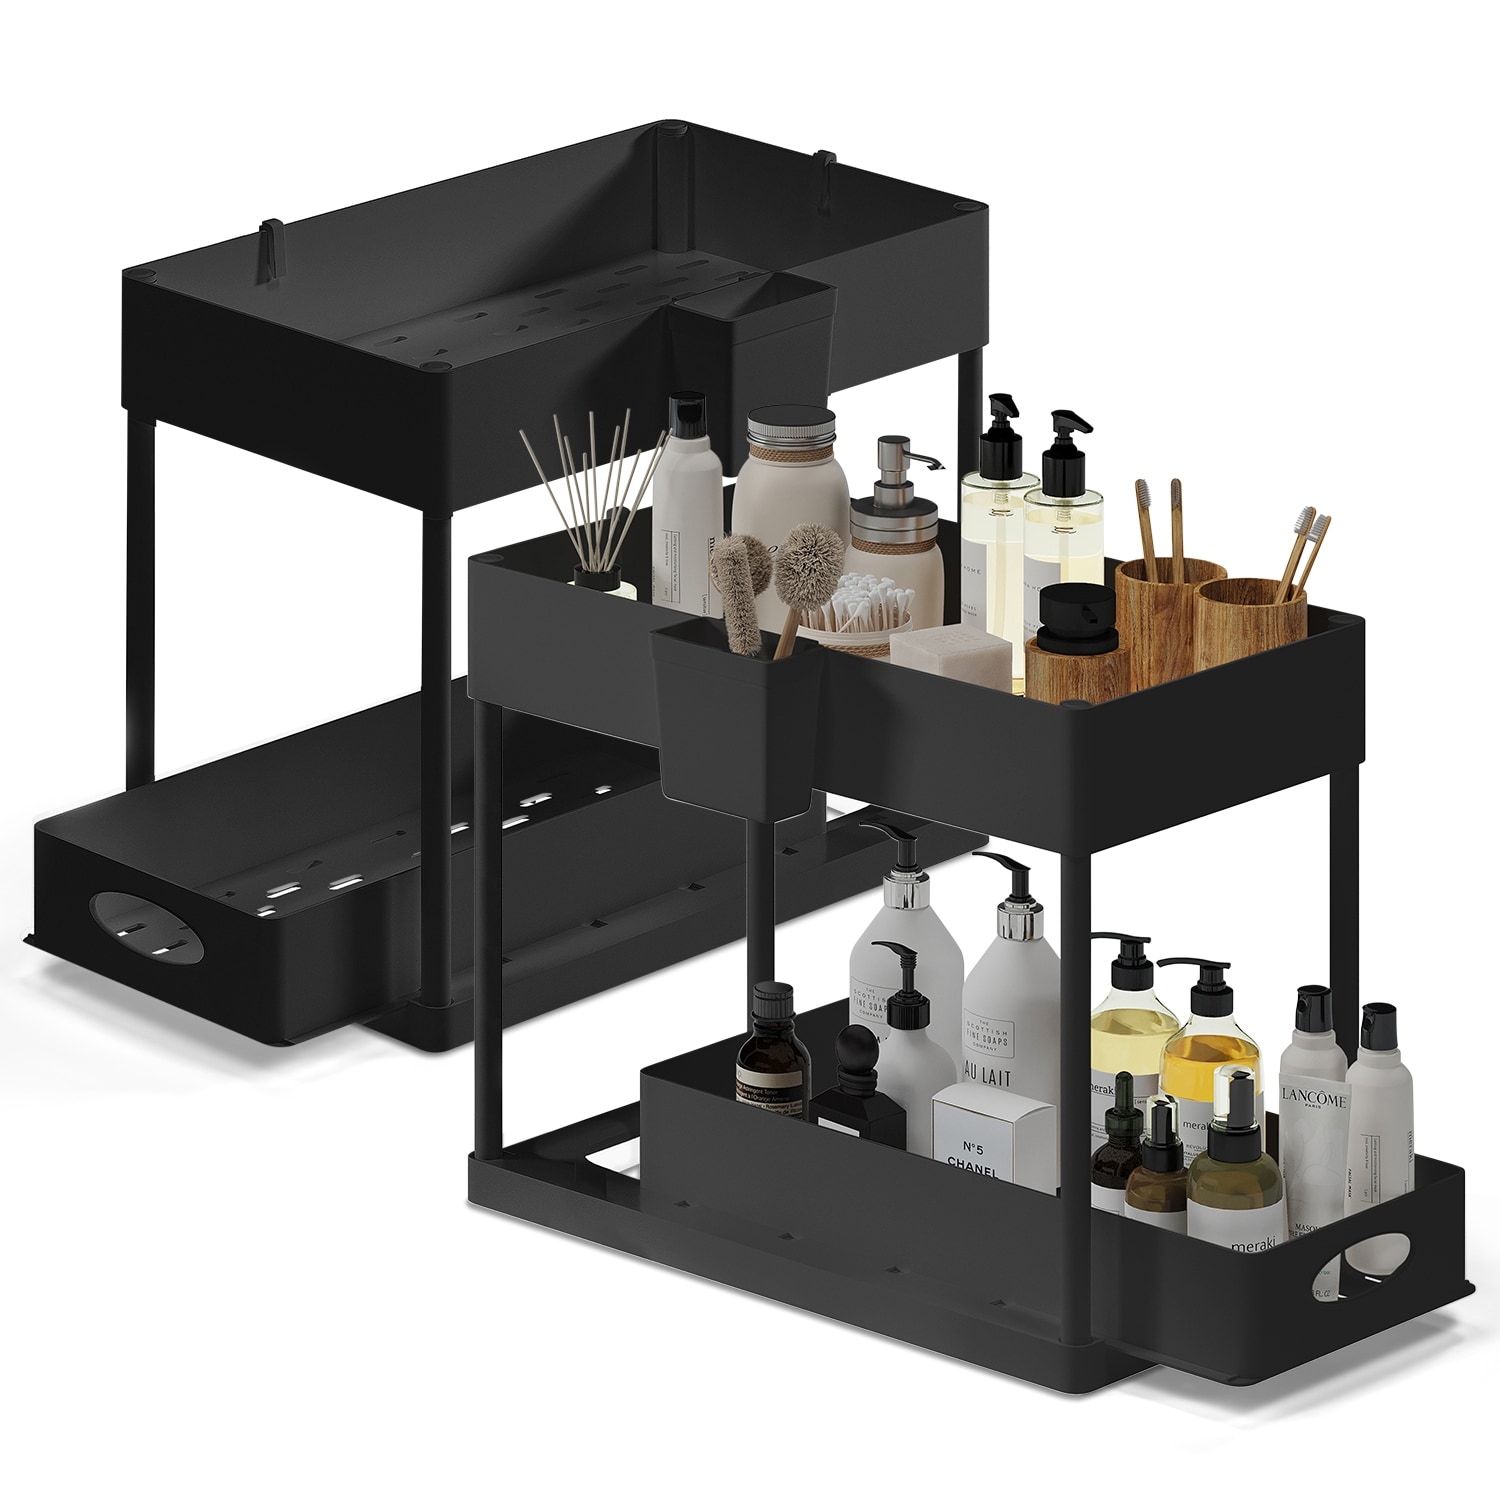 Kitidy 2-Tier Under Sink Cabinet Organizer for Kitchen and Bathroom,  Multipurpose Stainless Steel Storage Shelf with Sliding Storage Drawers